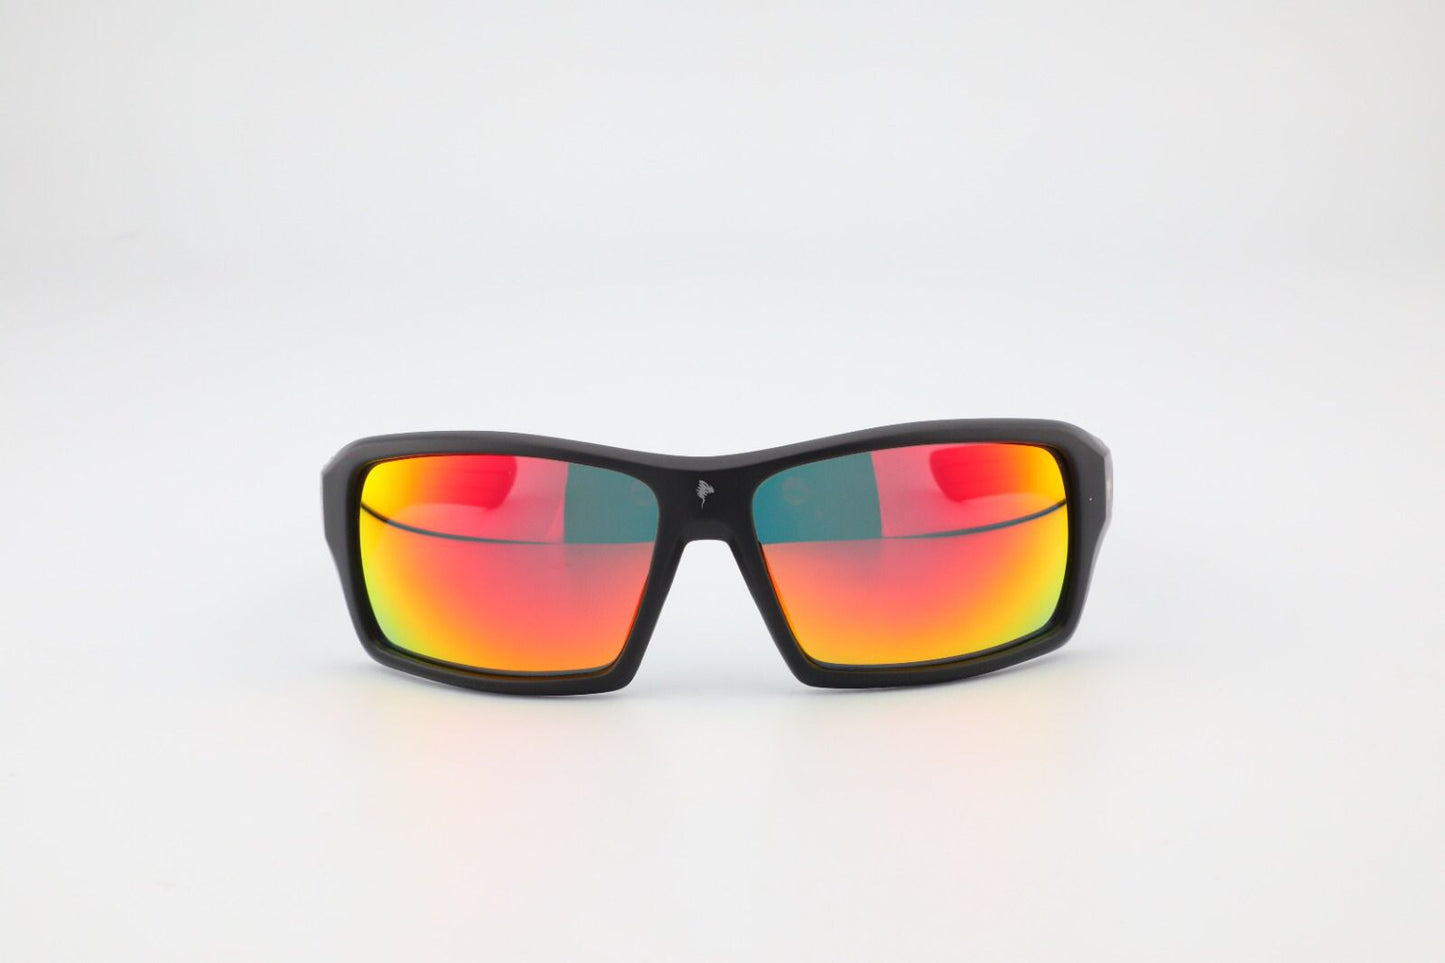 sports sunglasses online store - eye wear frames - sports sunglasses frame